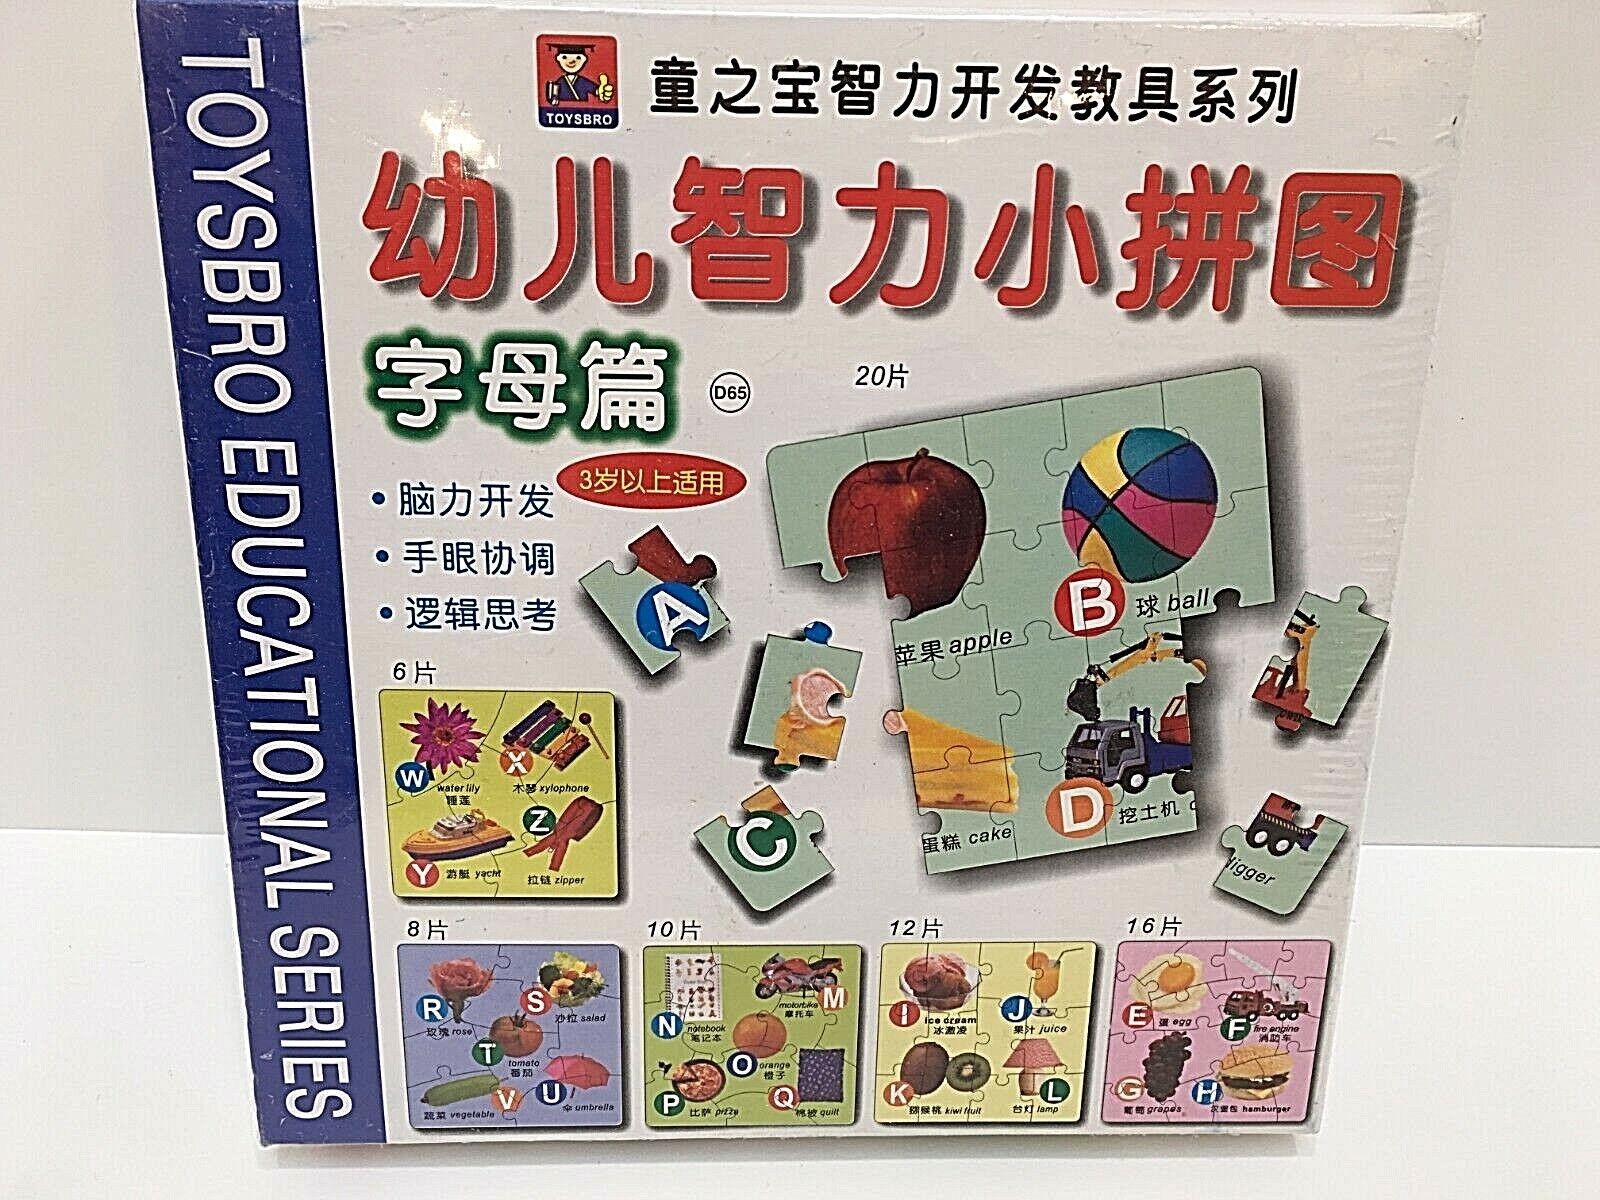 Toysbro Educational Series BILINGUAL PUZZLES Chinese & English 6